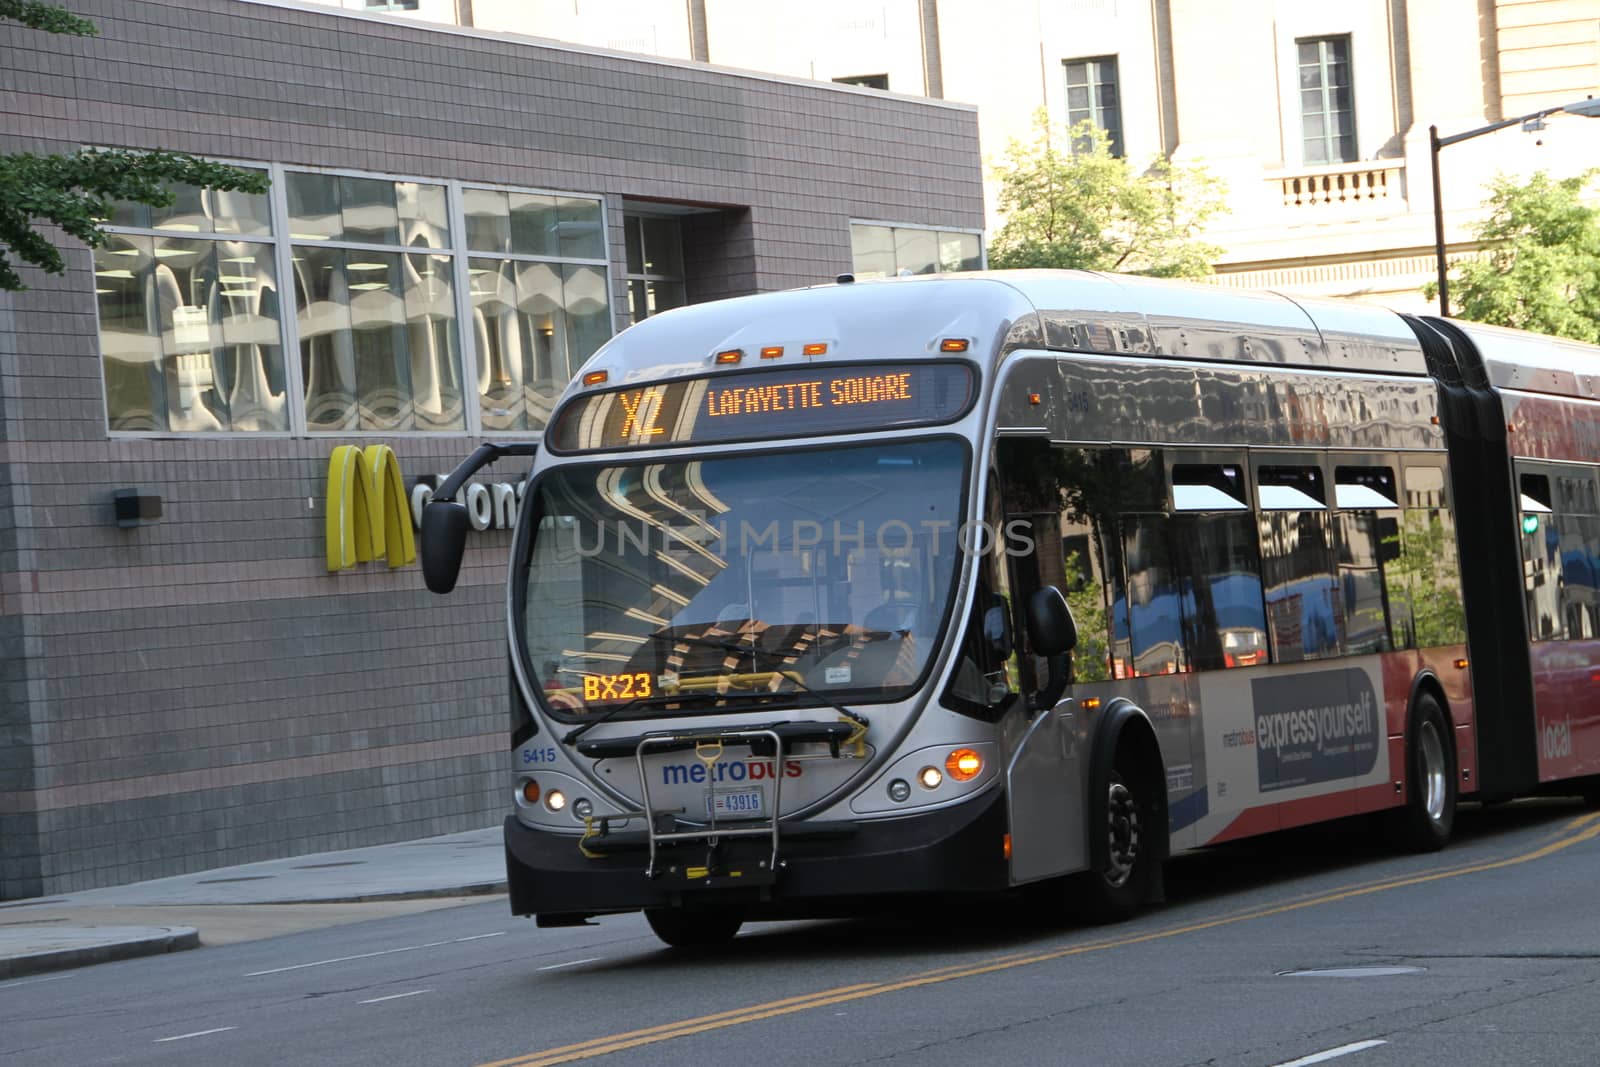 Washington DC, USA - may 18, 2012. City bus in Washington